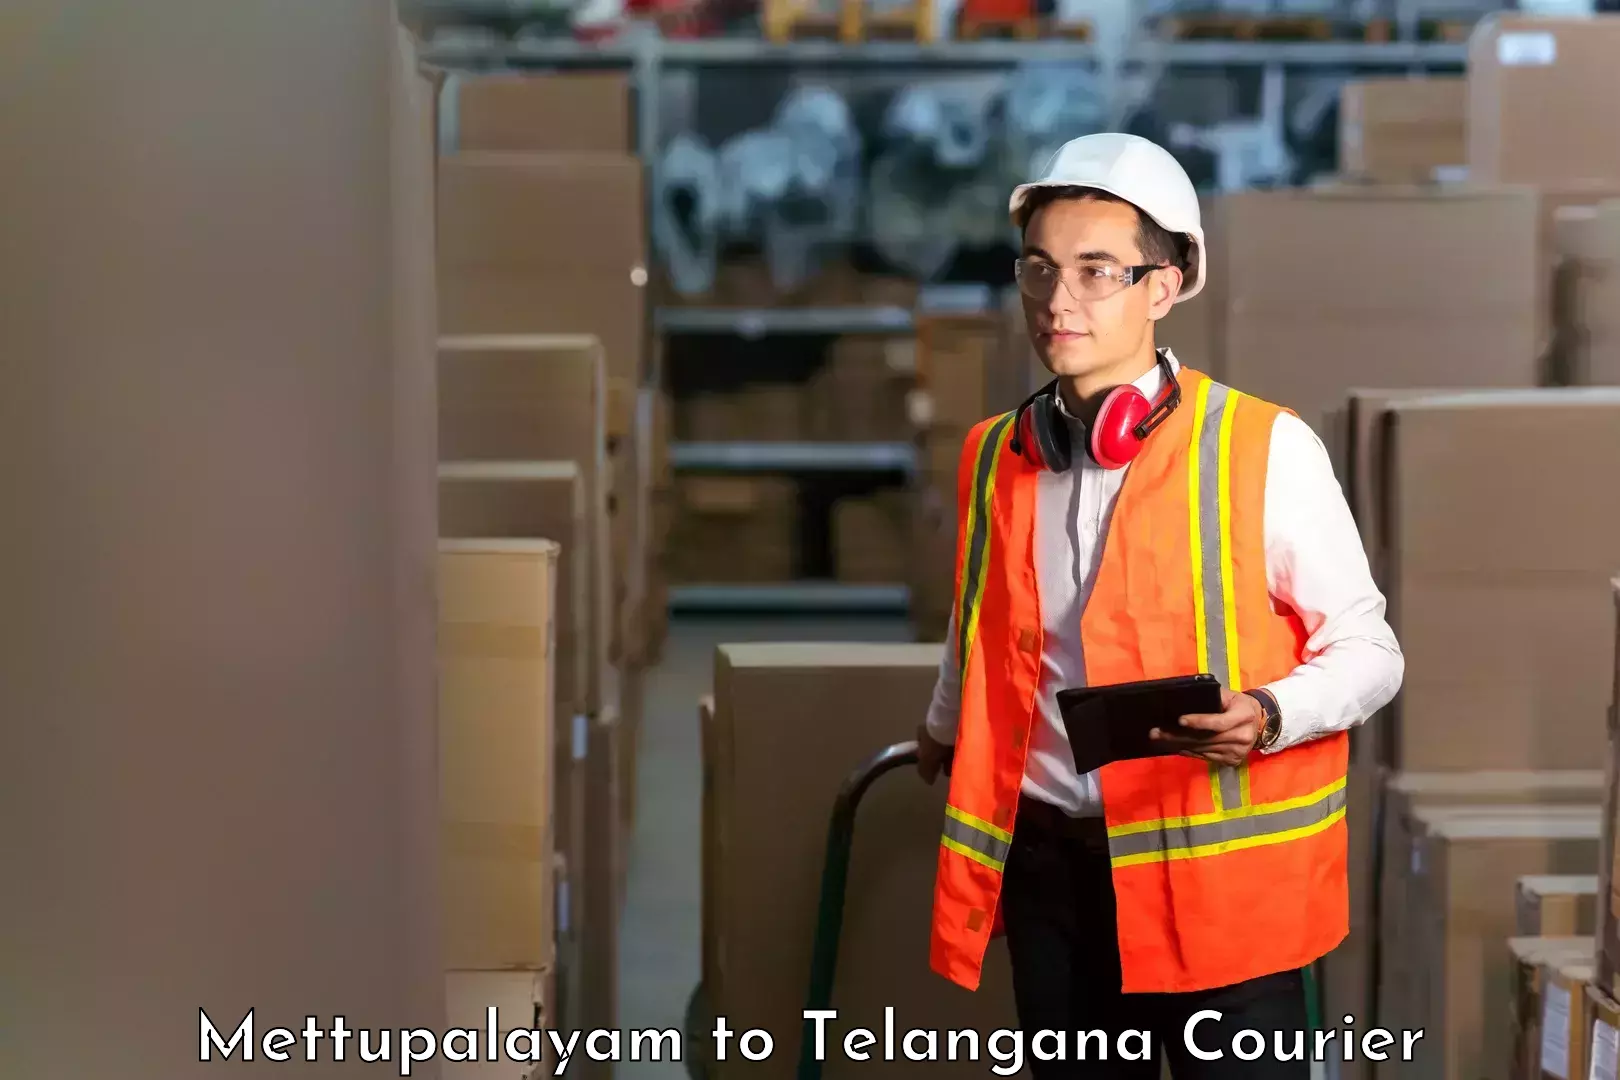 High-speed parcel service Mettupalayam to Telangana